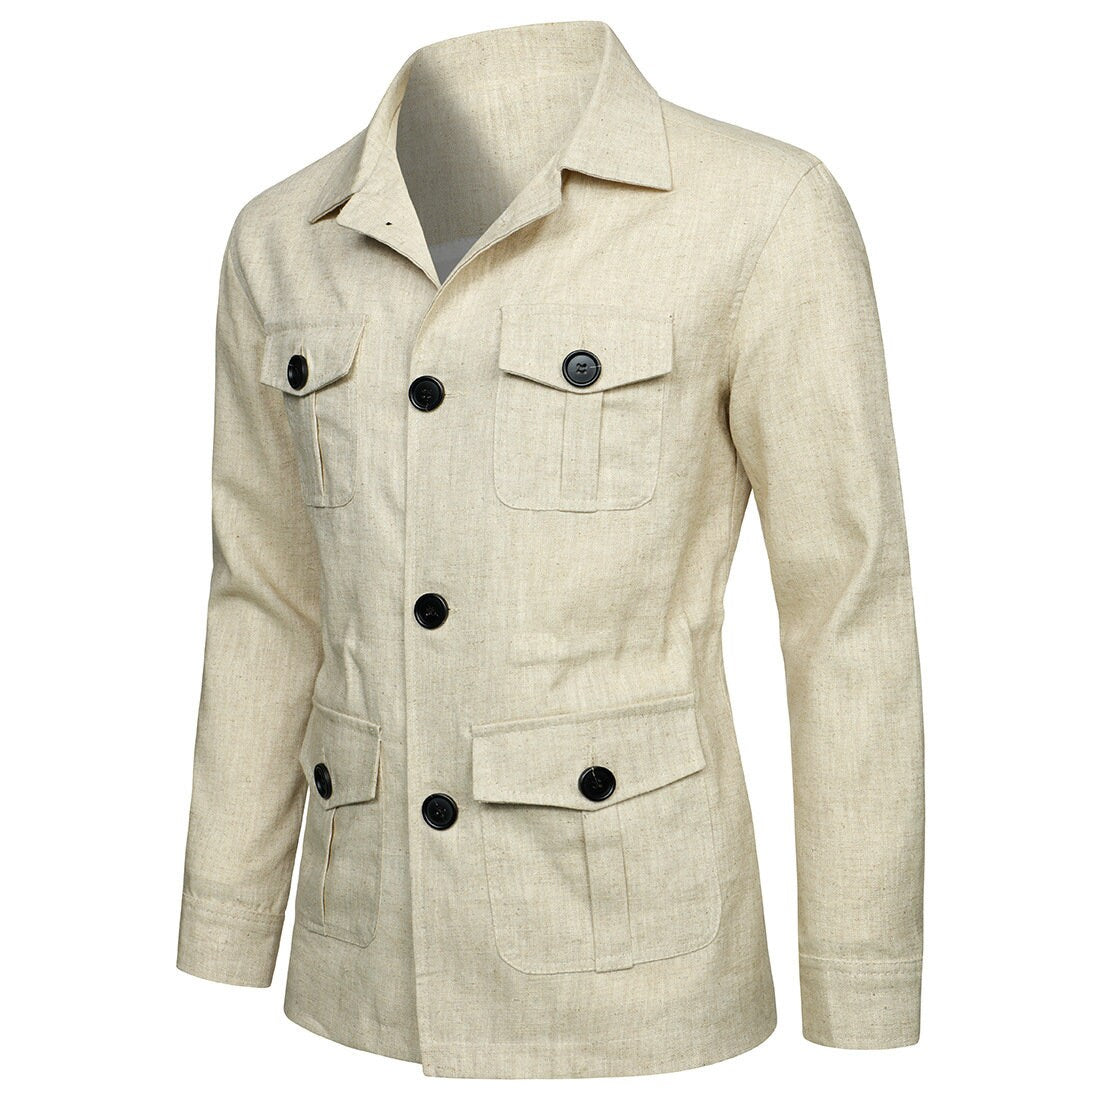 Military Safari Style Sartorial Jacket with Adjustable Waist, Cotton Linen Fabric for Comfort All Season